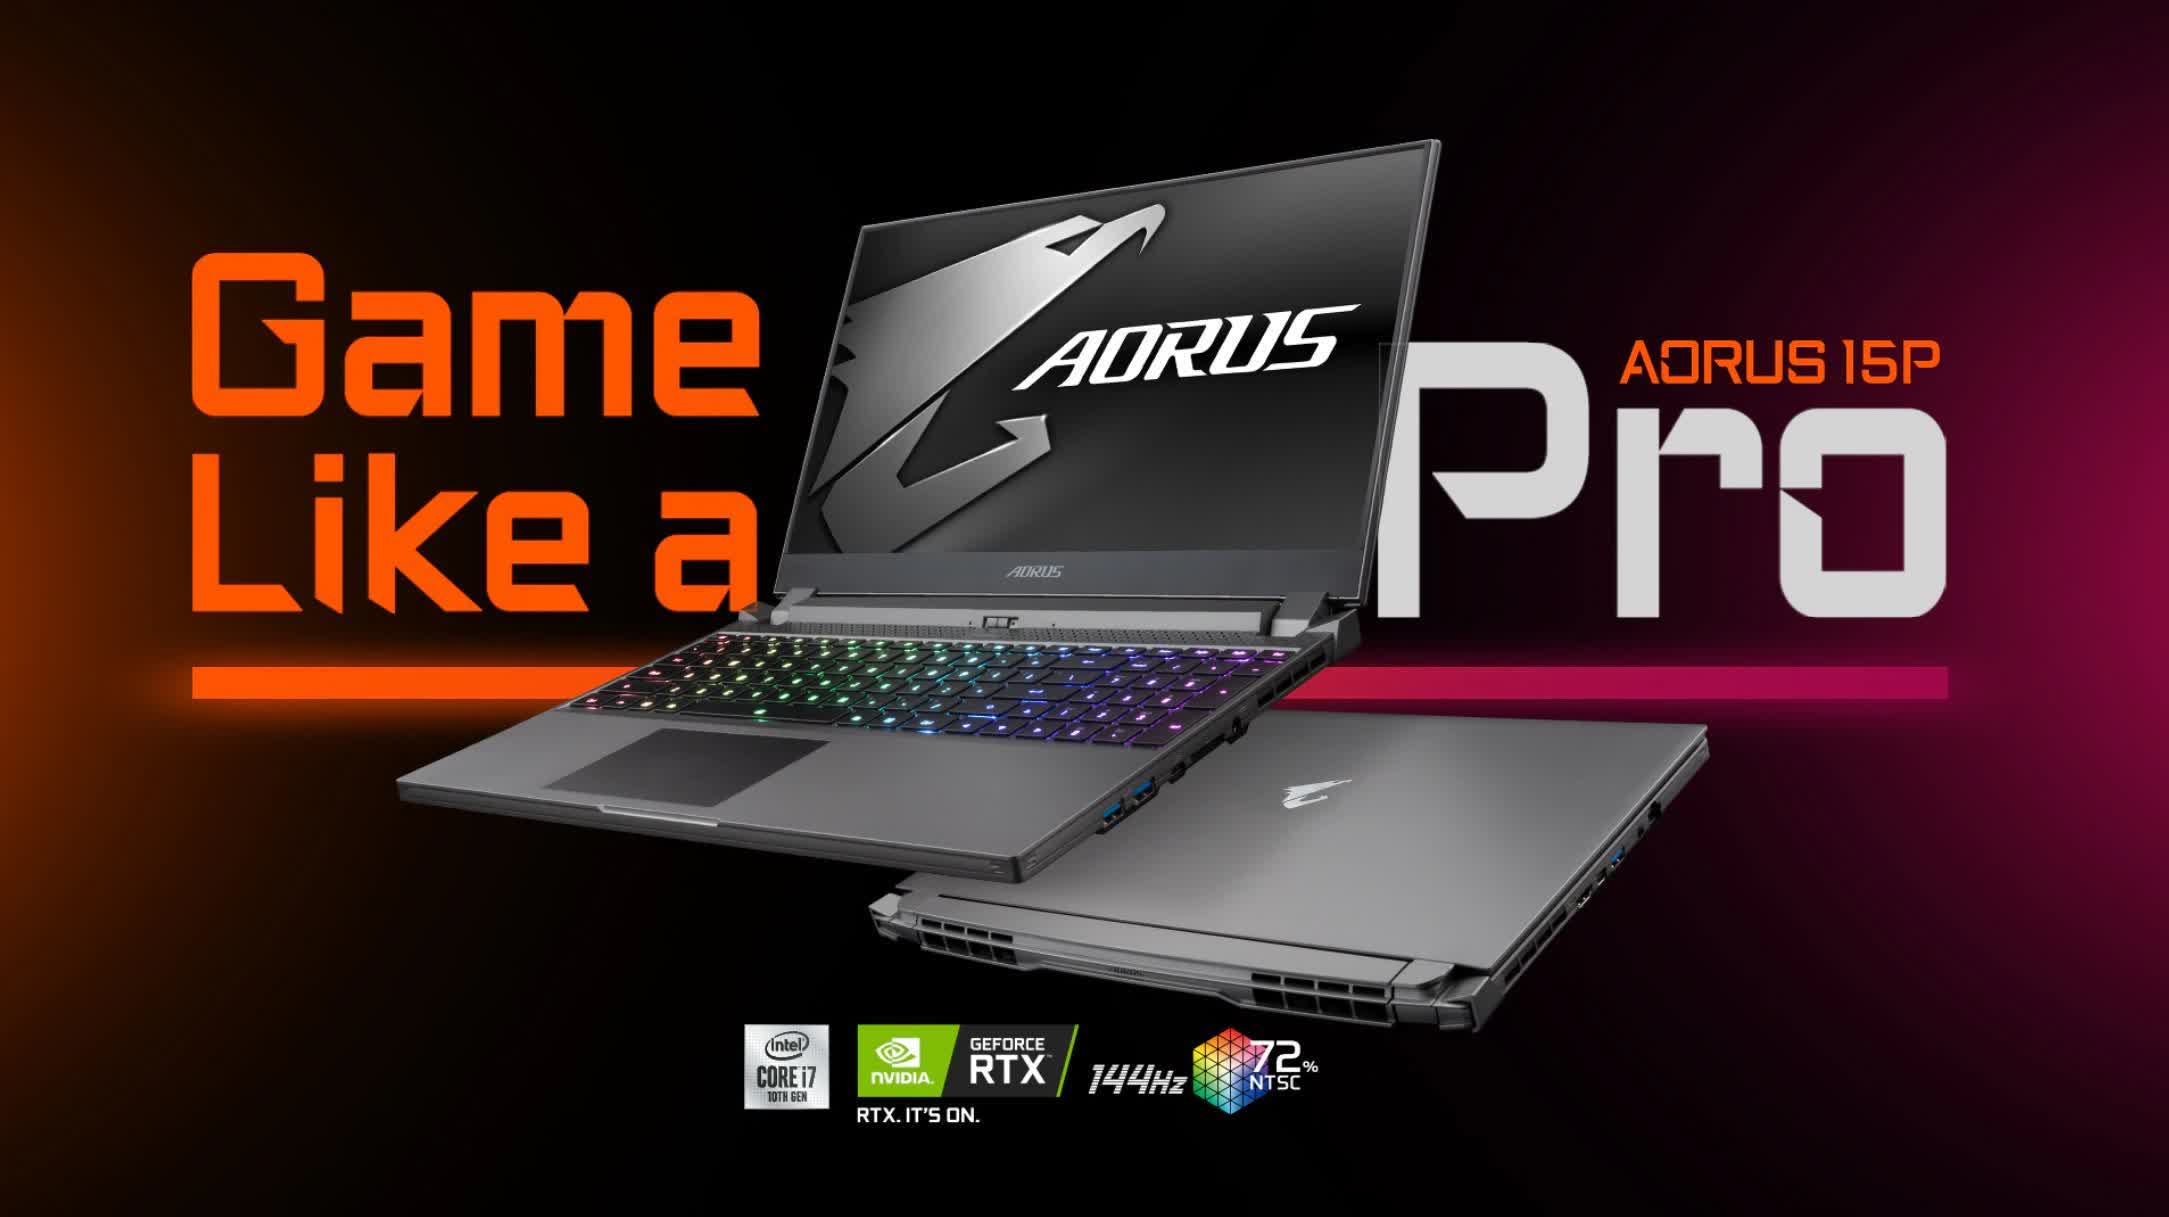 Gigabyte shows off Aorus 15P laptop designed for pro gamers